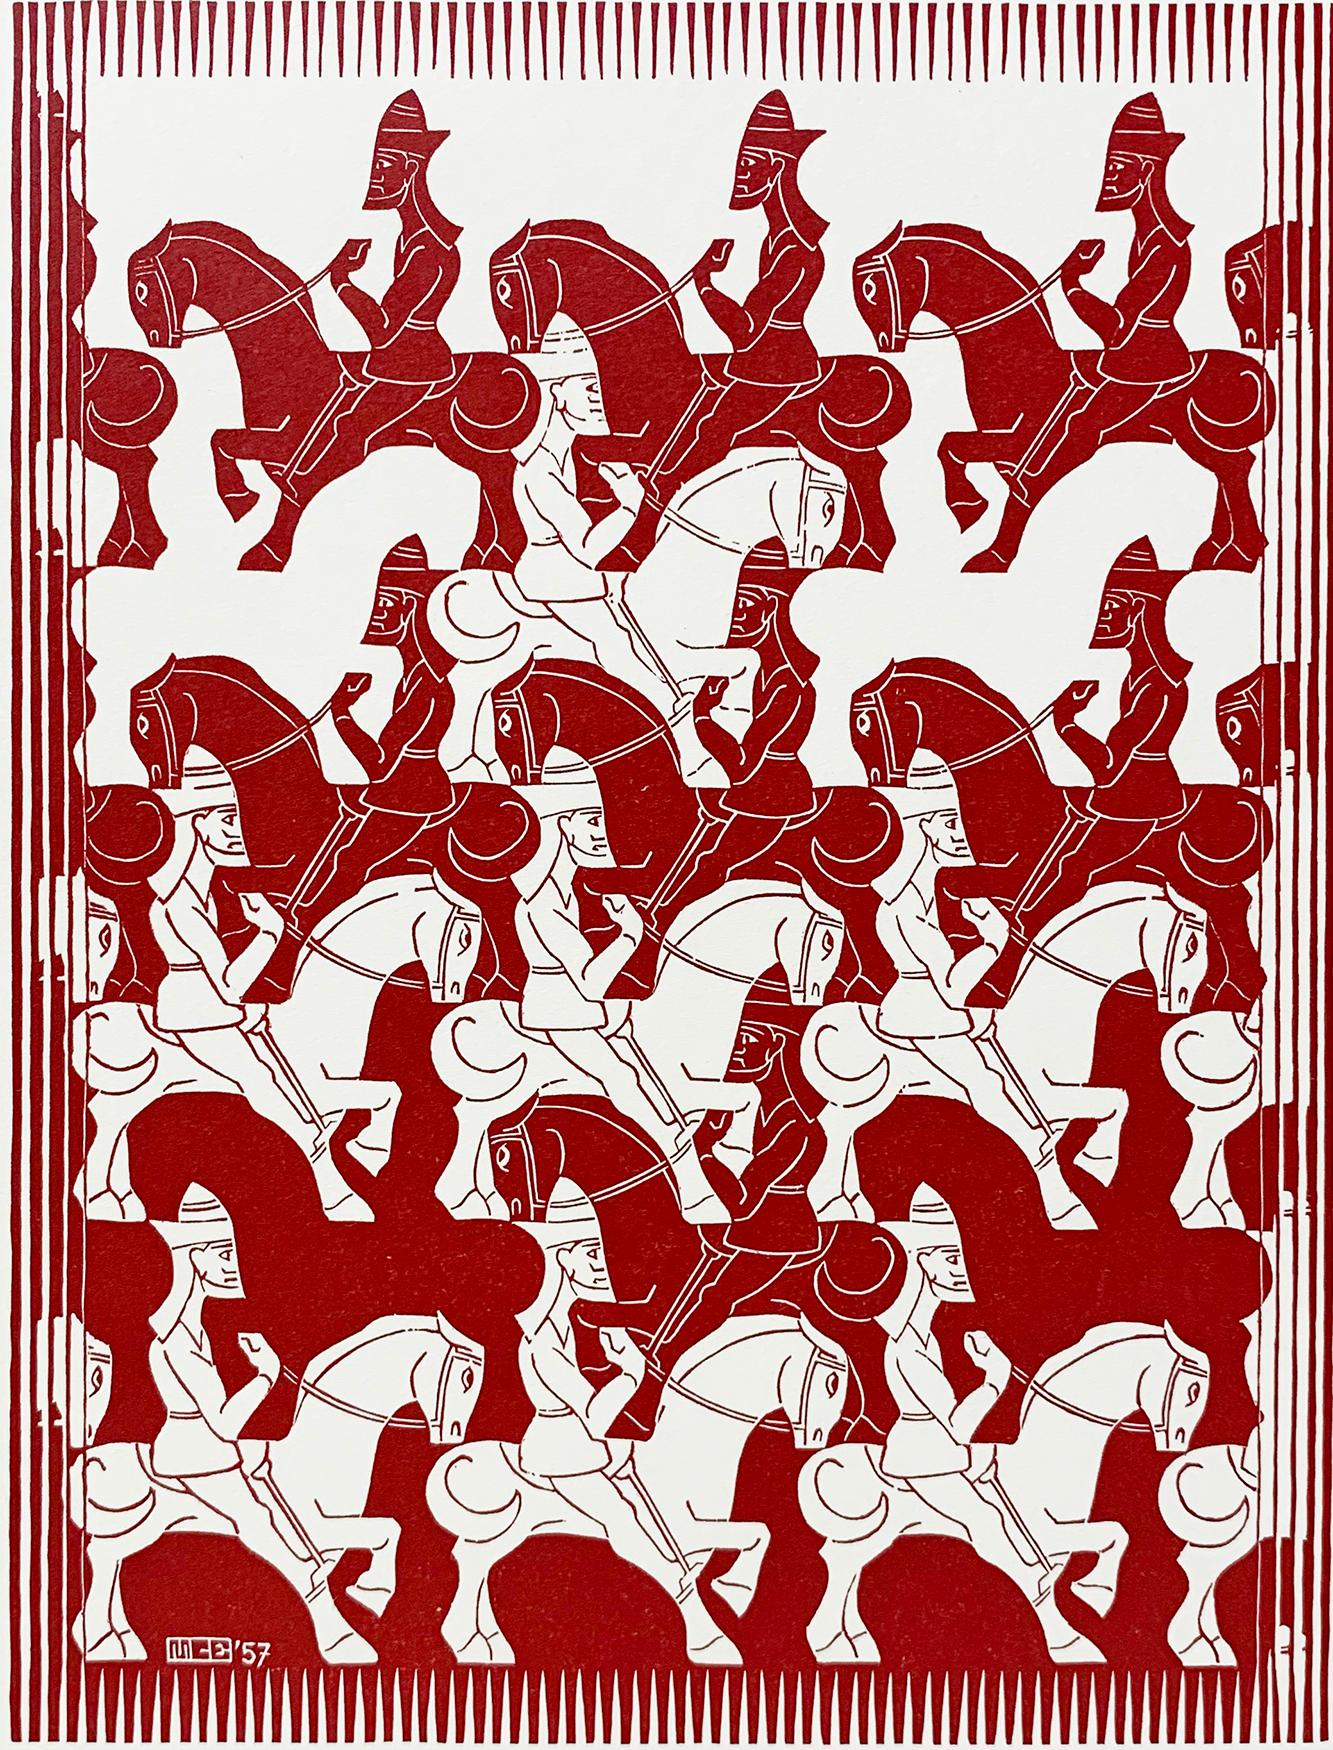 Regular Division of the Plane III (Horsemen) - Print by M.C. Escher